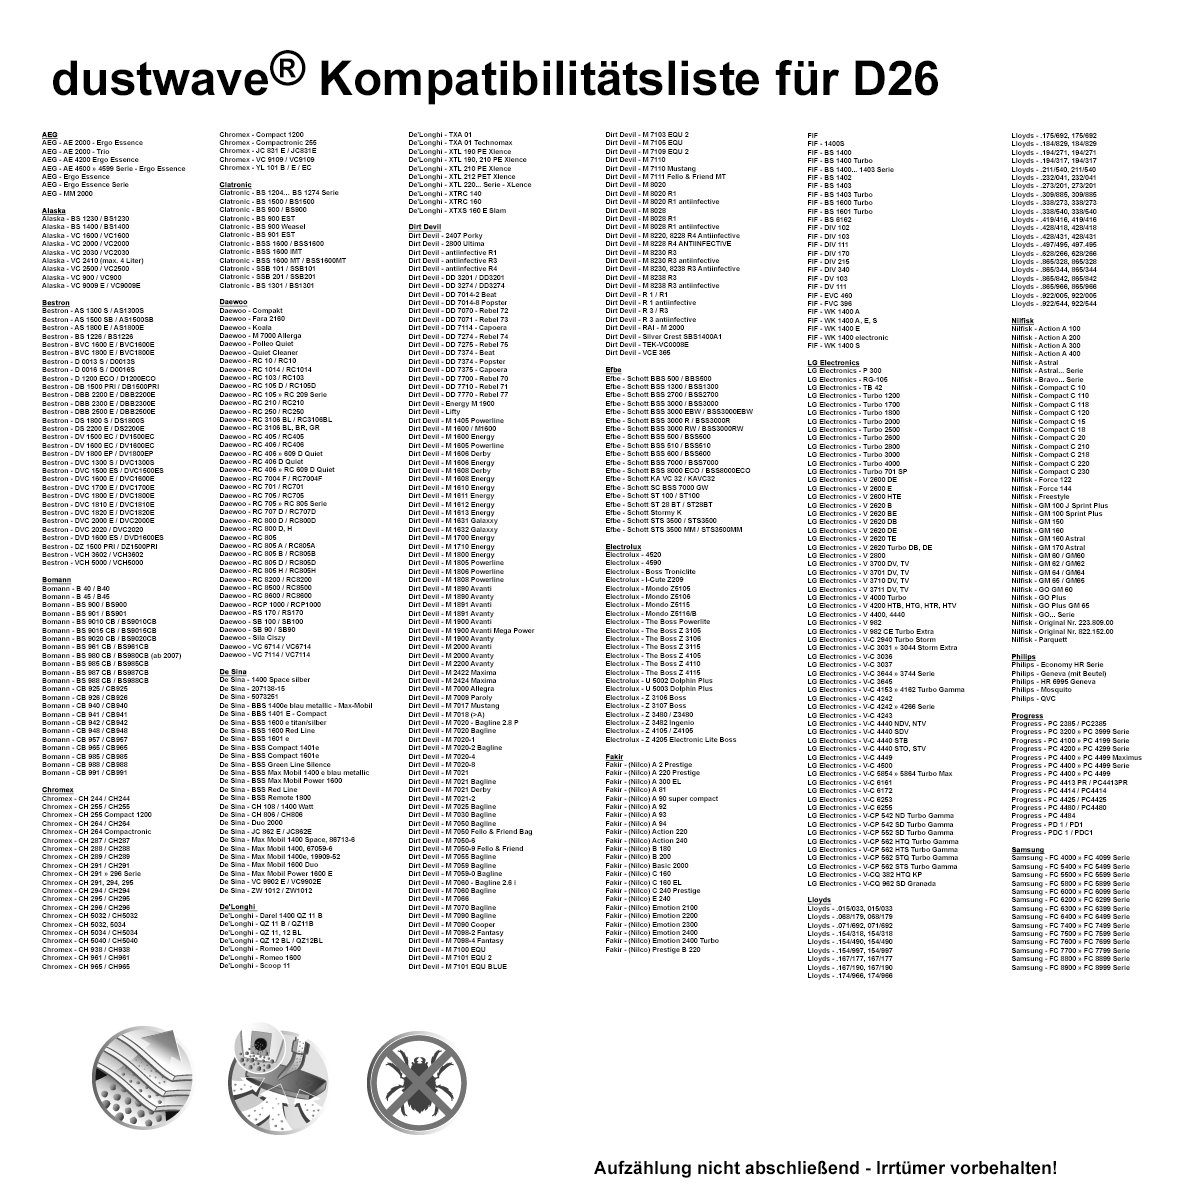 AFK AFK passend 15x15cm Dustwave Standard 1 W.14, zuschneidbar) Staubsaugerbeutel 2000 (ca. - + BS - Hepa-Filter 2000 Test-Set, 1 BS 1 W.14 Staubsaugerbeutel St., für Test-Set,